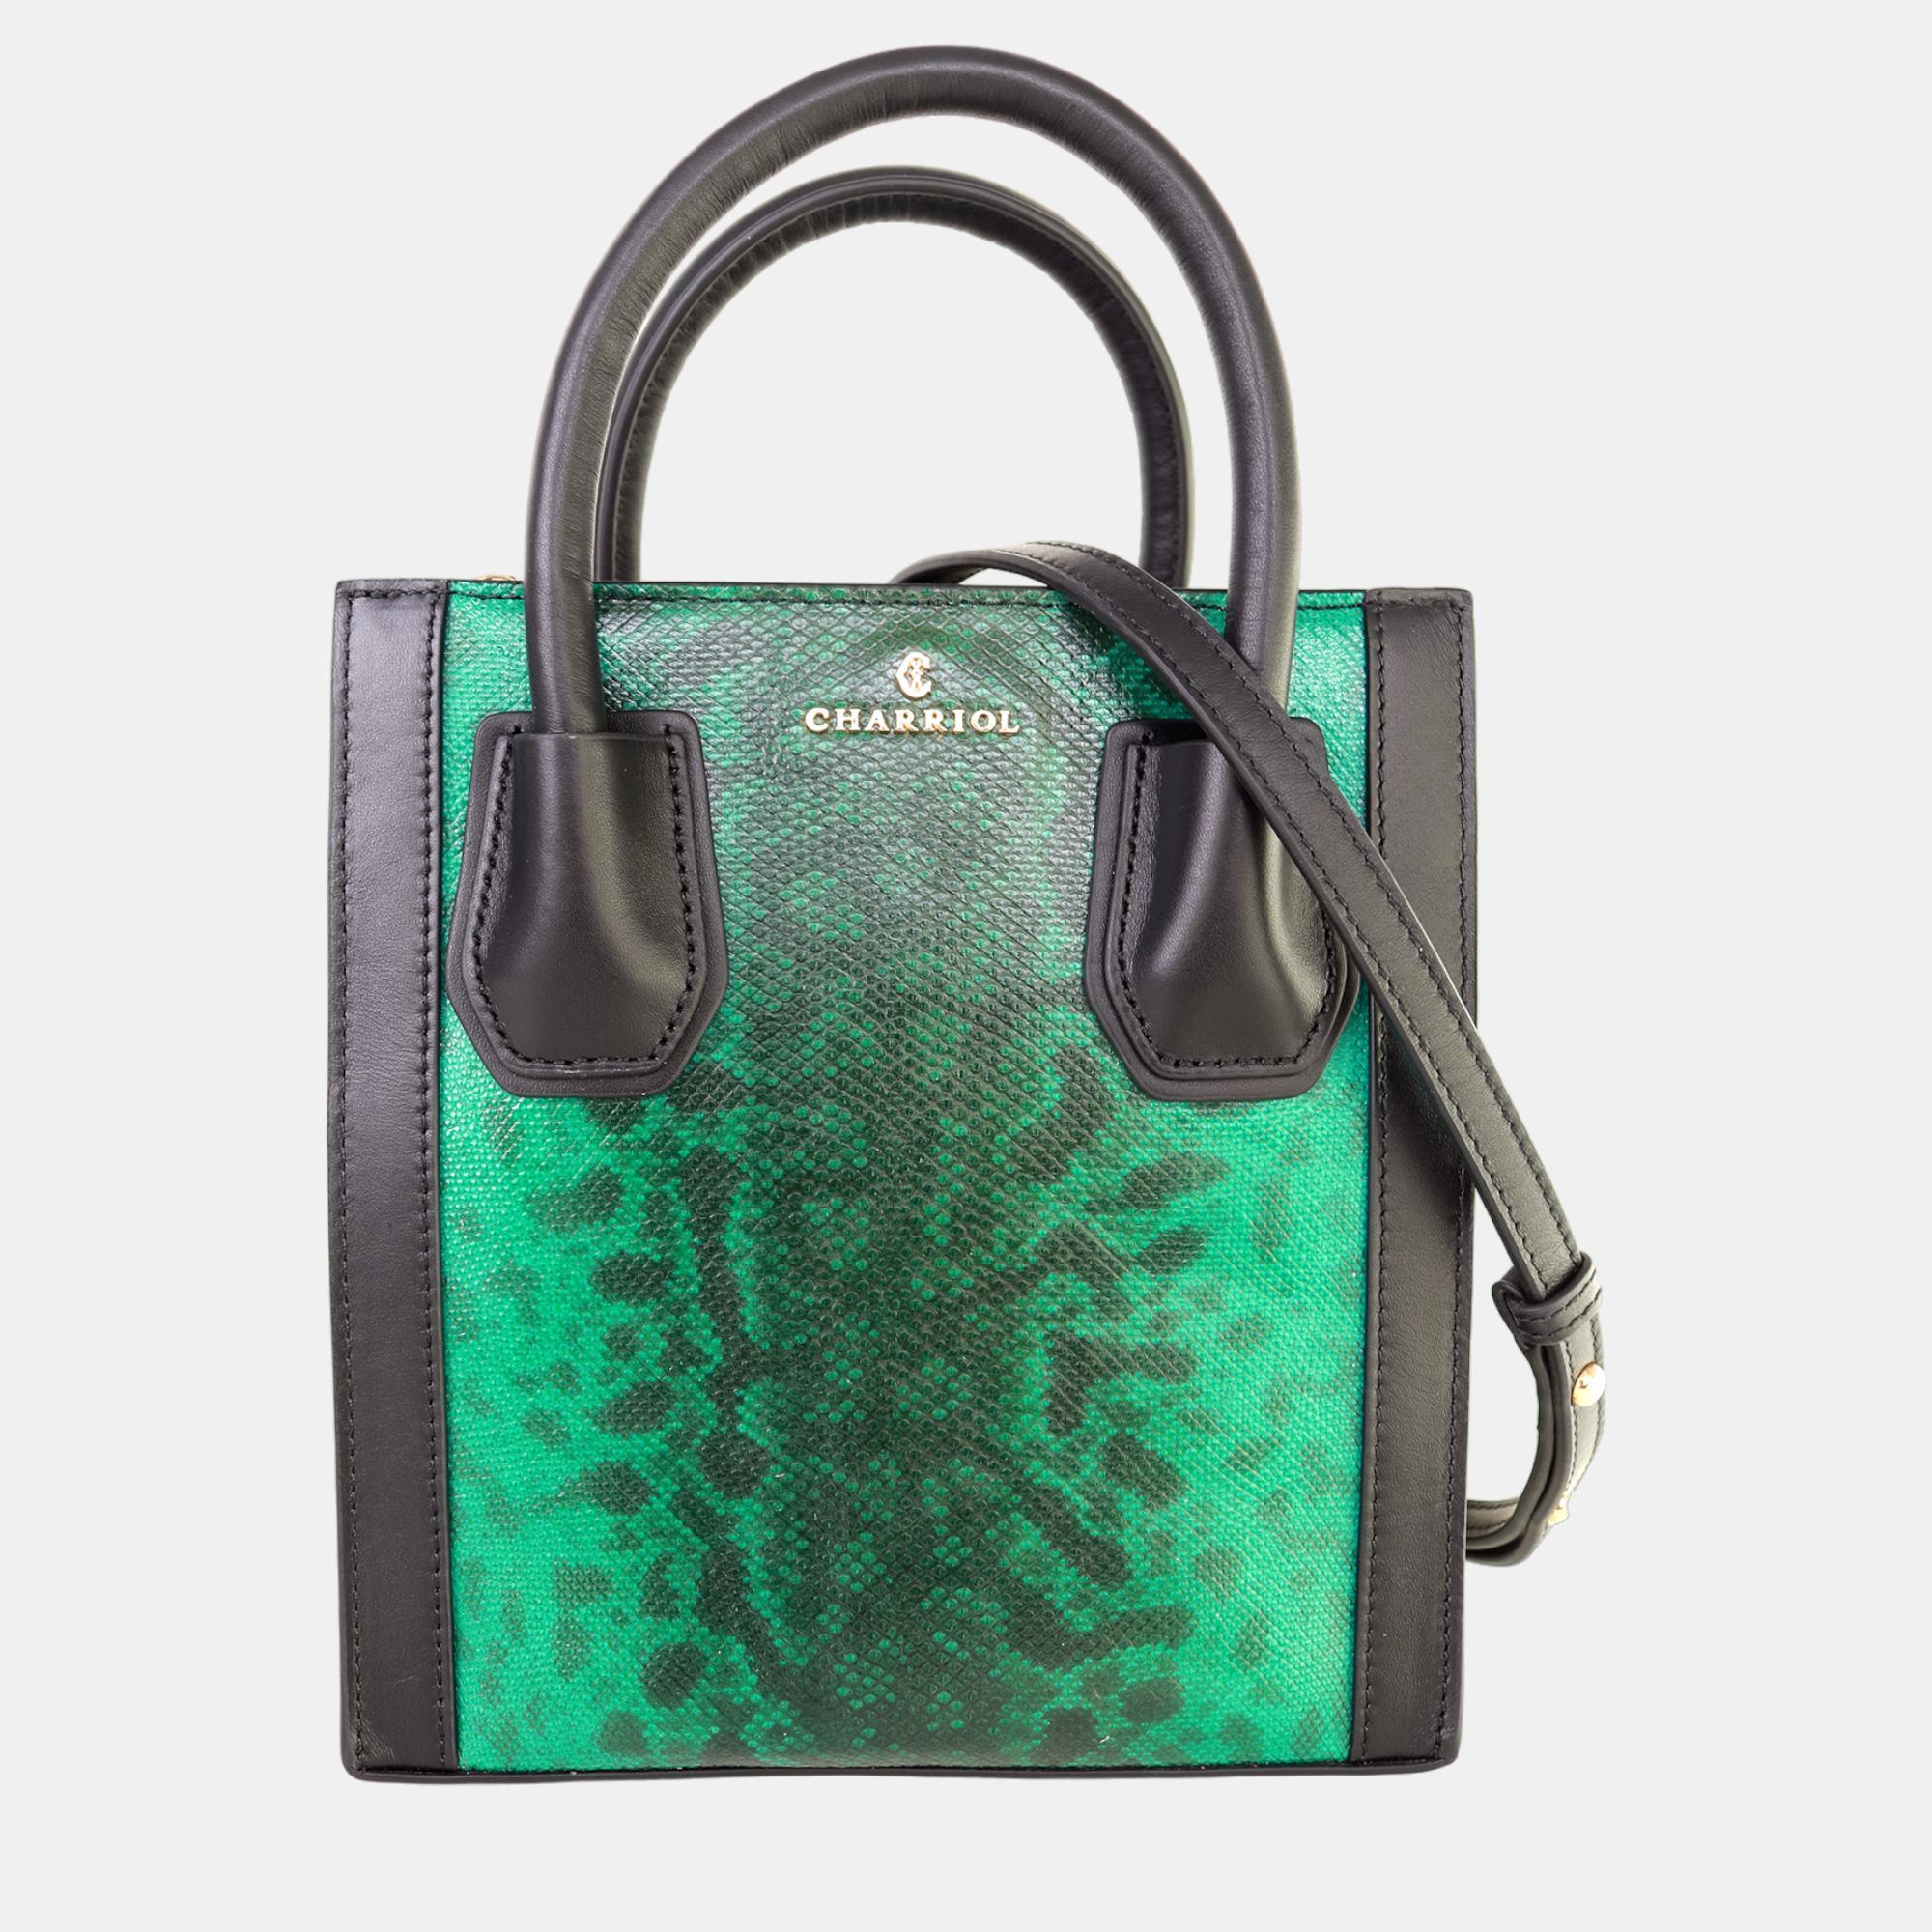 Pre-owned Charriol Green Leather Tote Exotic Skin Handbag